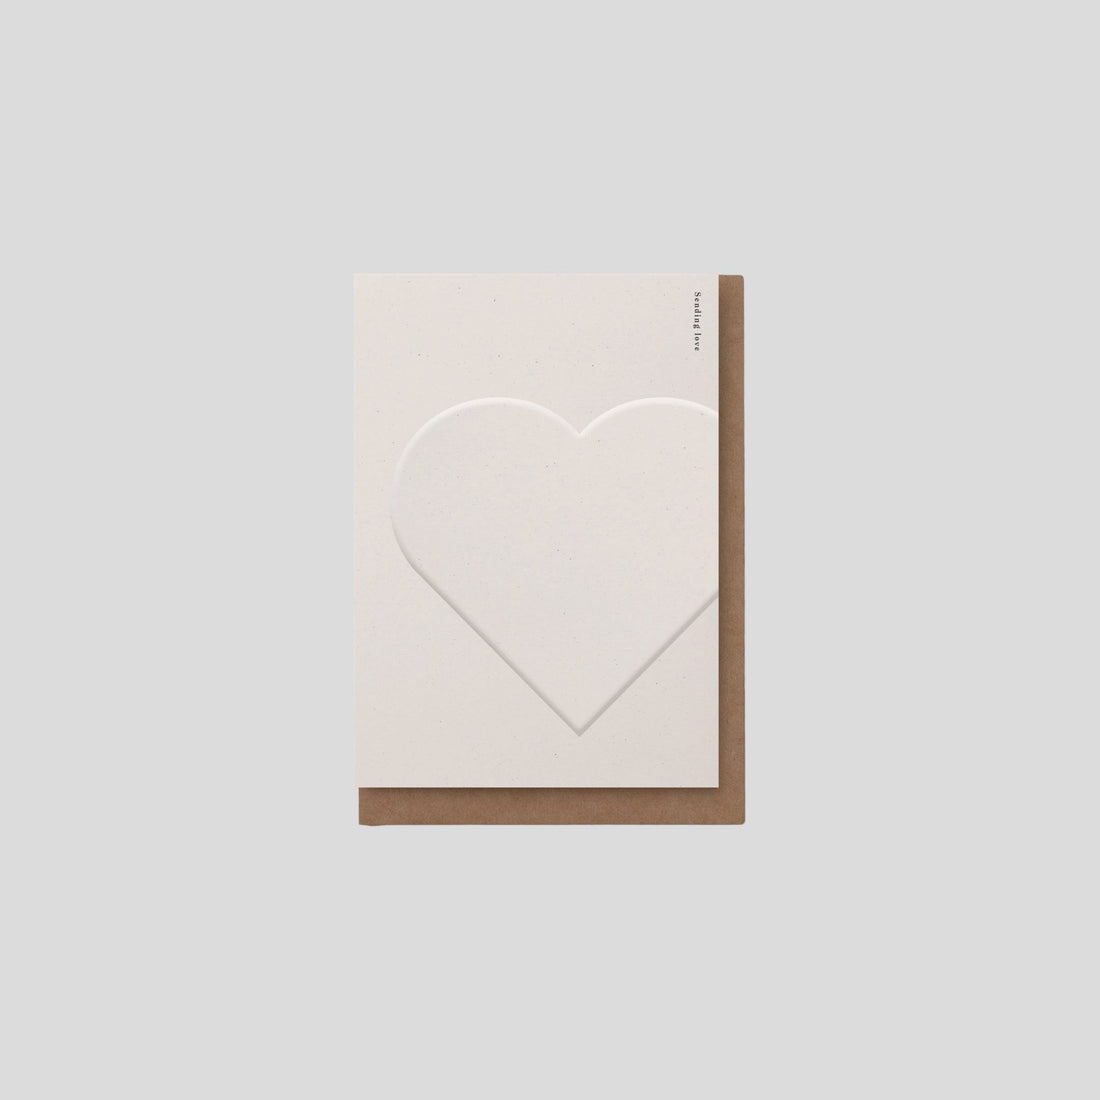 Card sending love